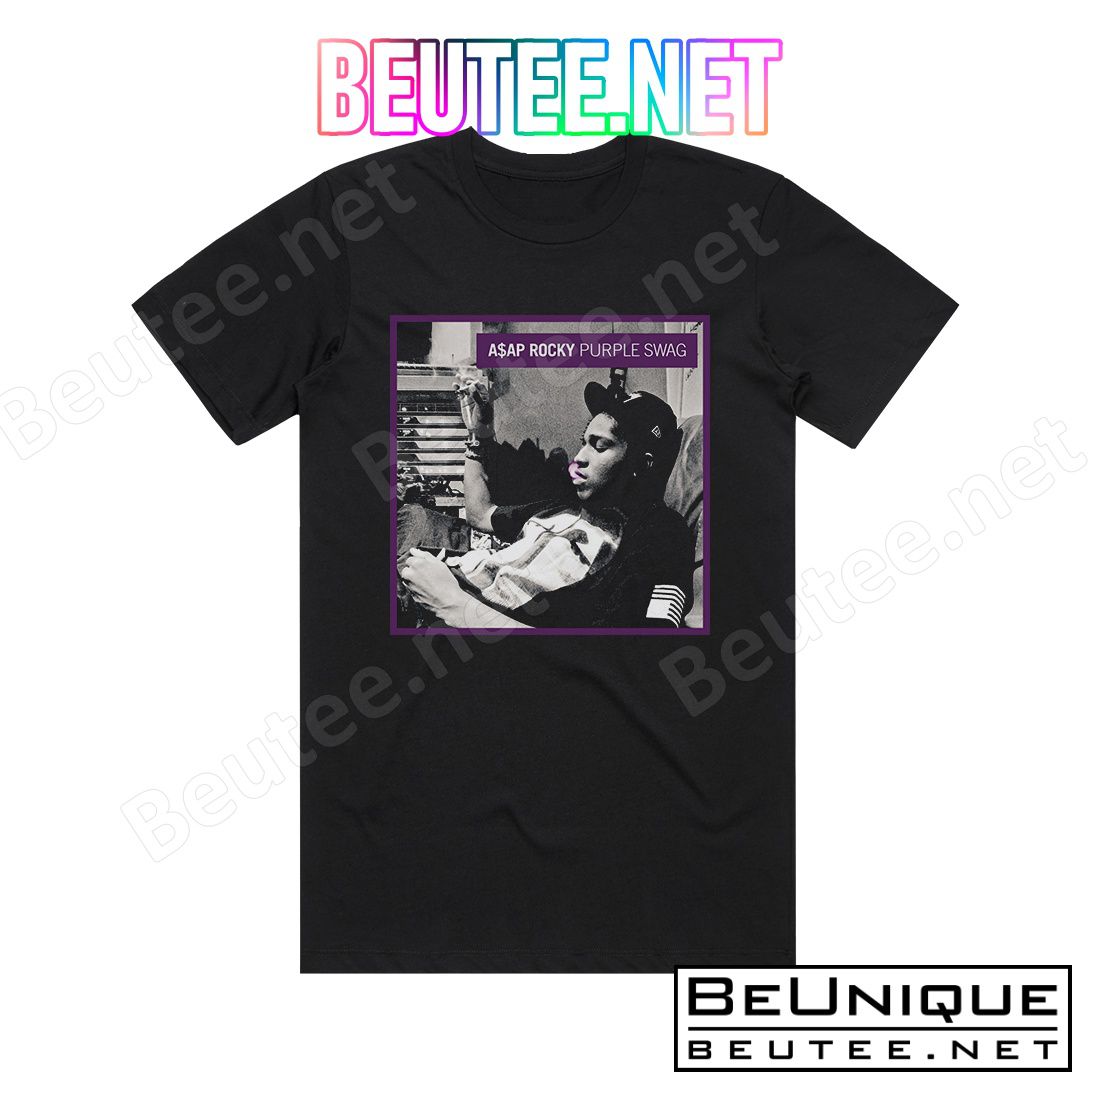 ASAP Rocky Purple Swag Album Cover T-Shirt